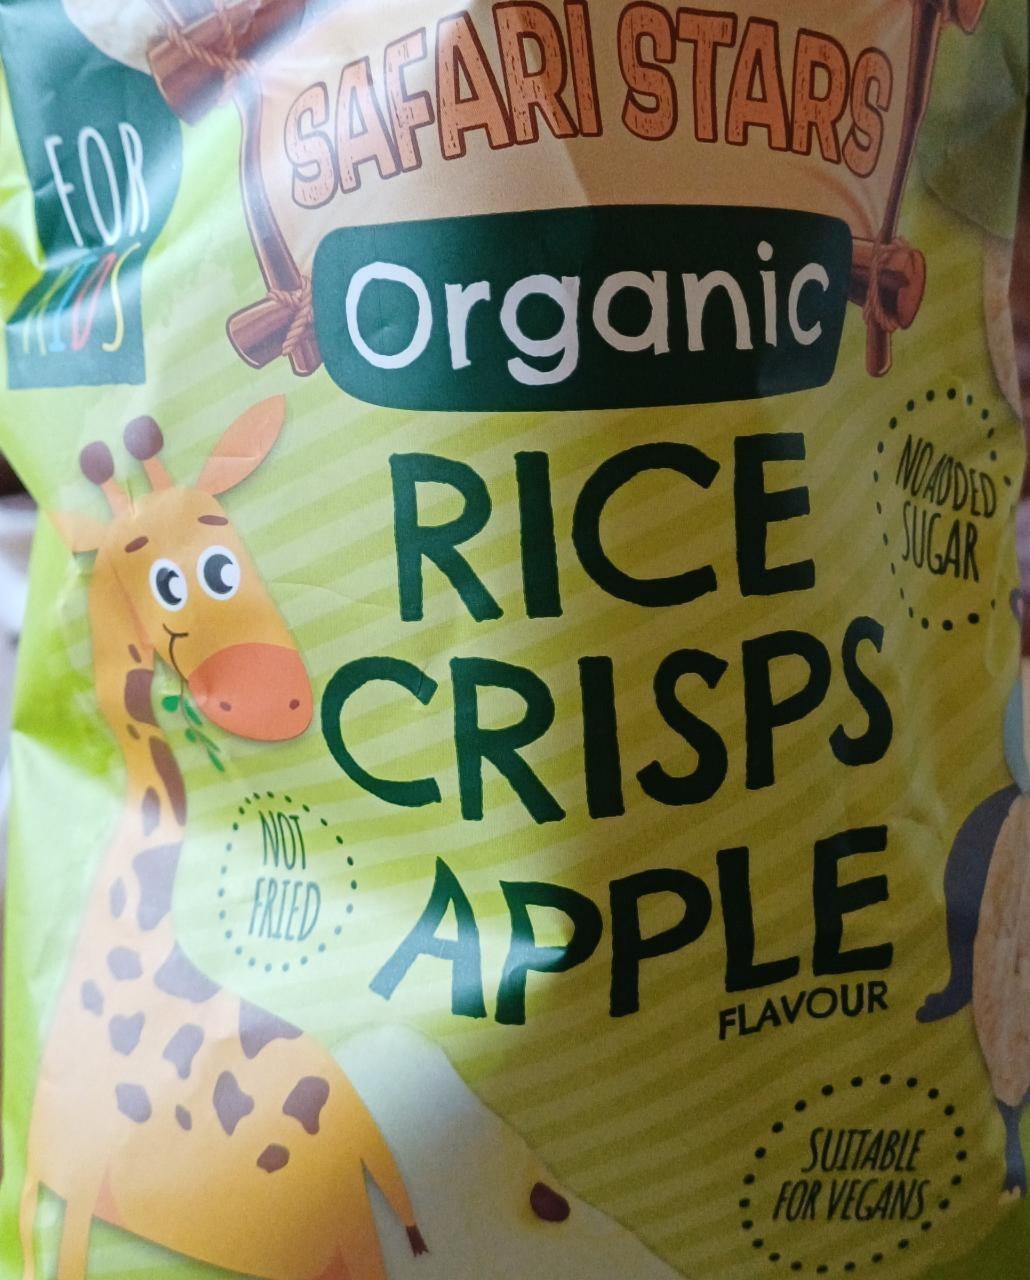 Фото - Organic rice crisps apple flavour Safari Stars